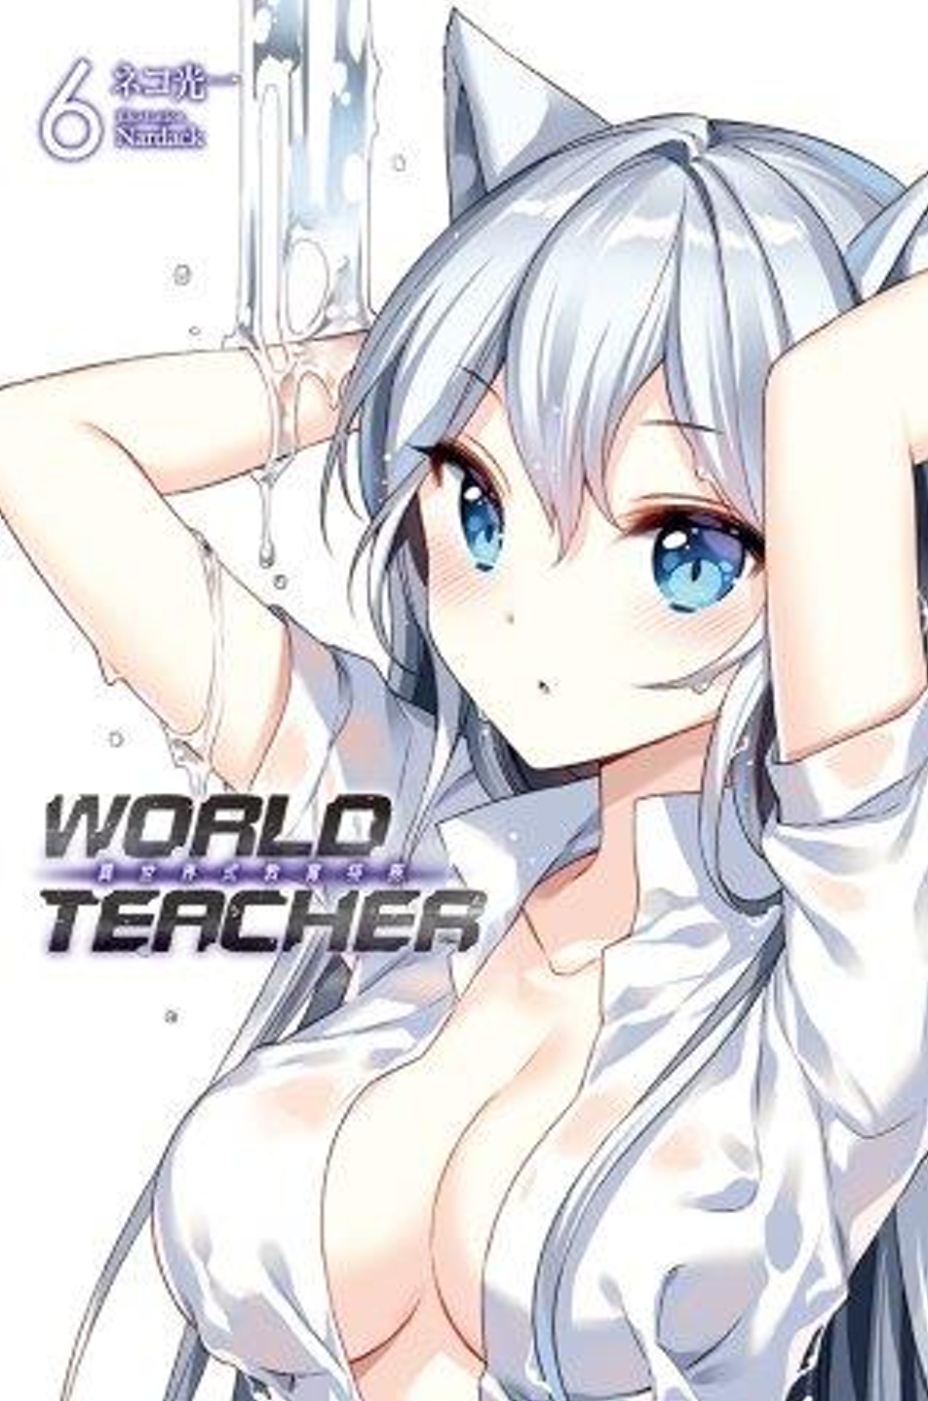 WORLD TEACHER 異世界式教育特務(06)特裝版